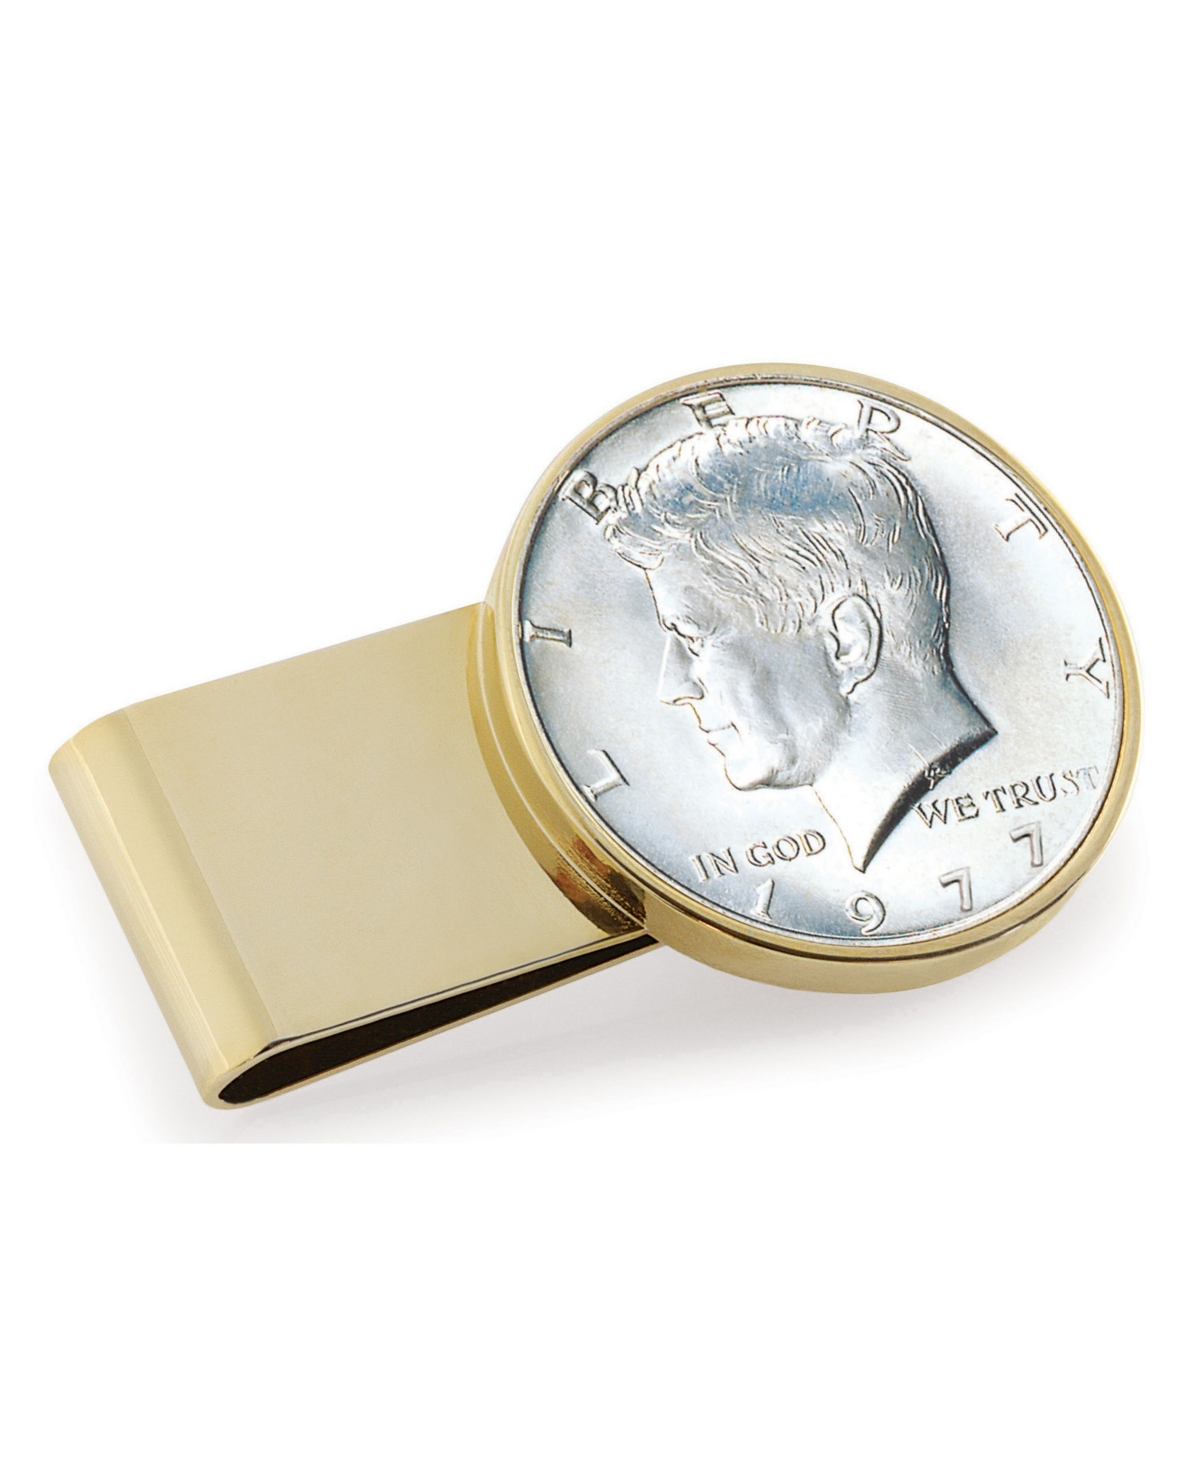 Men's American Coin Treasures Jfk Half Dollar Stainless Steel Coin Money Clip - Gold